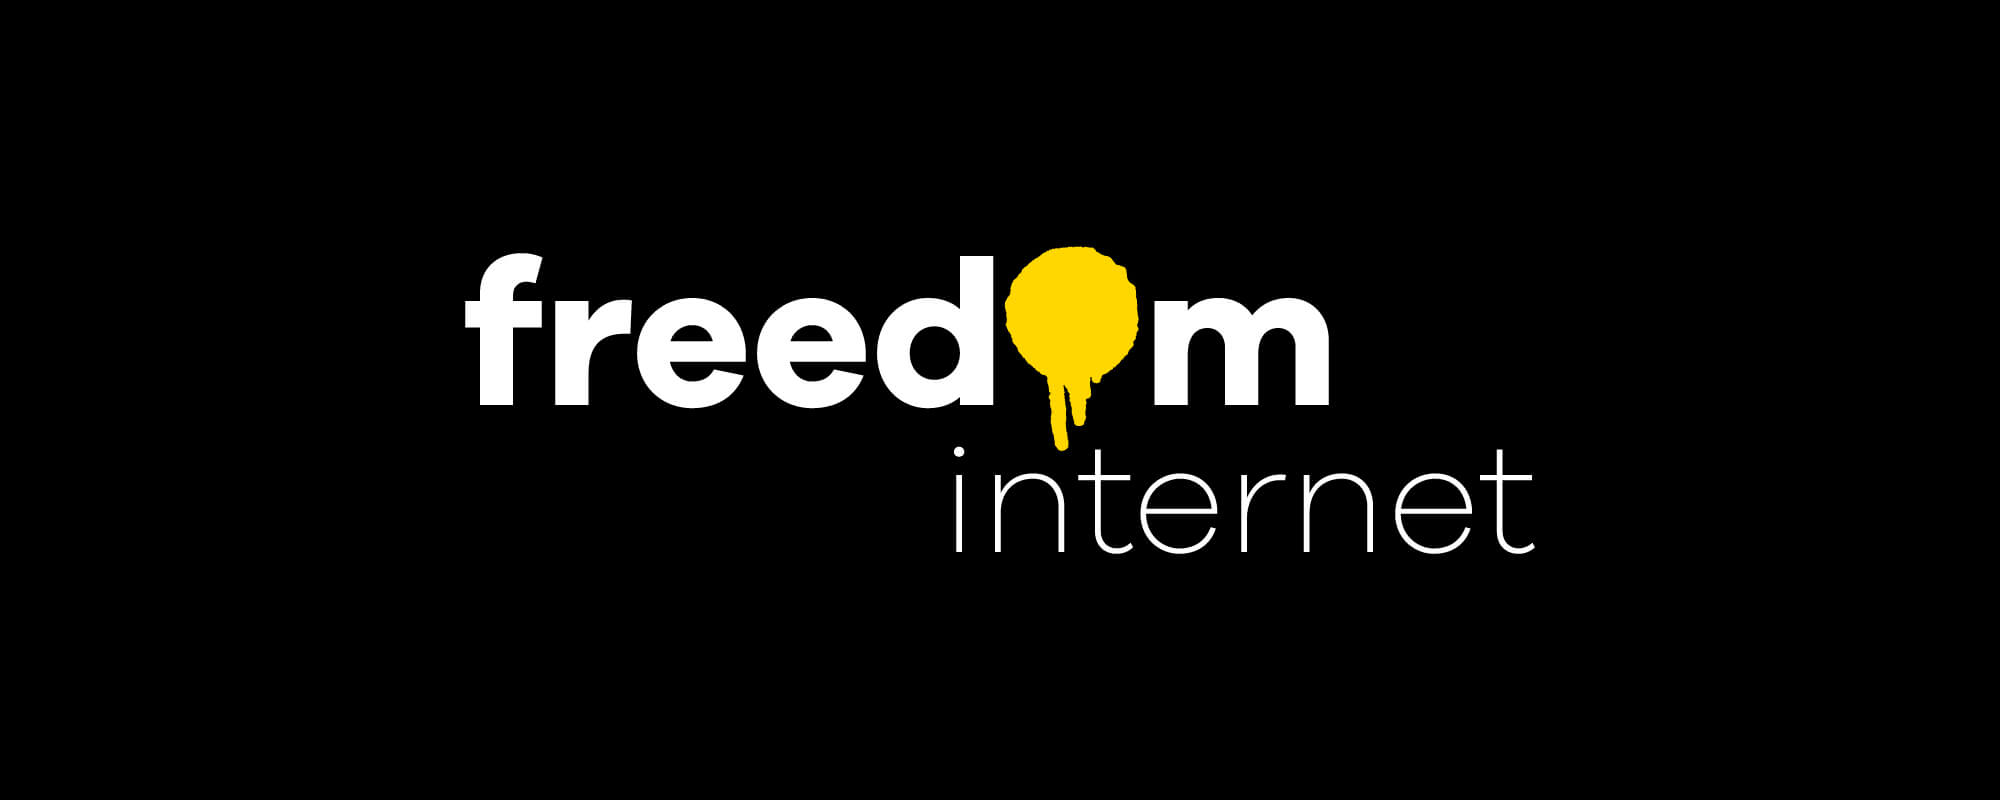 Freedom internet